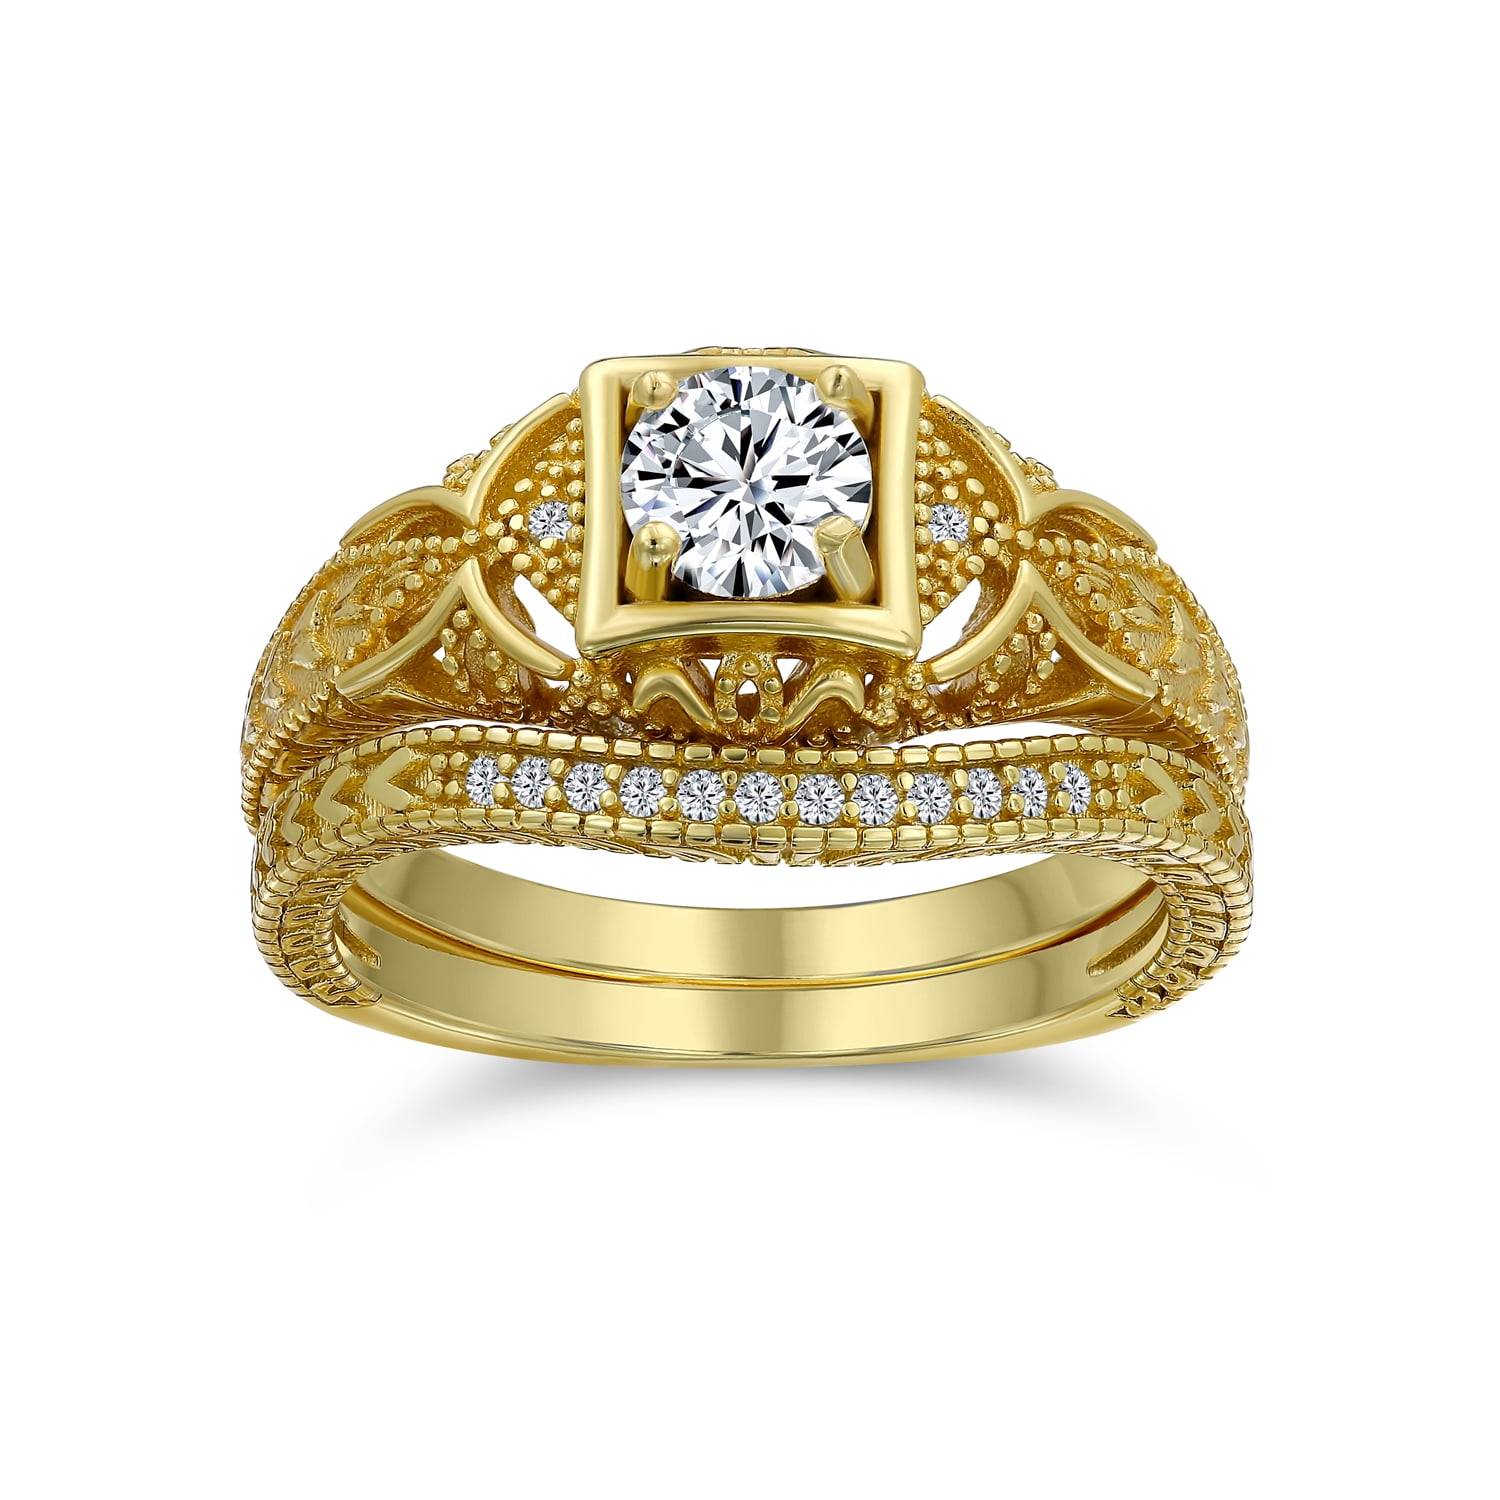 1Ct Round Cut Diamond His & Her Bridal Wedding Ring Set 14K Yellow Gold Finish 